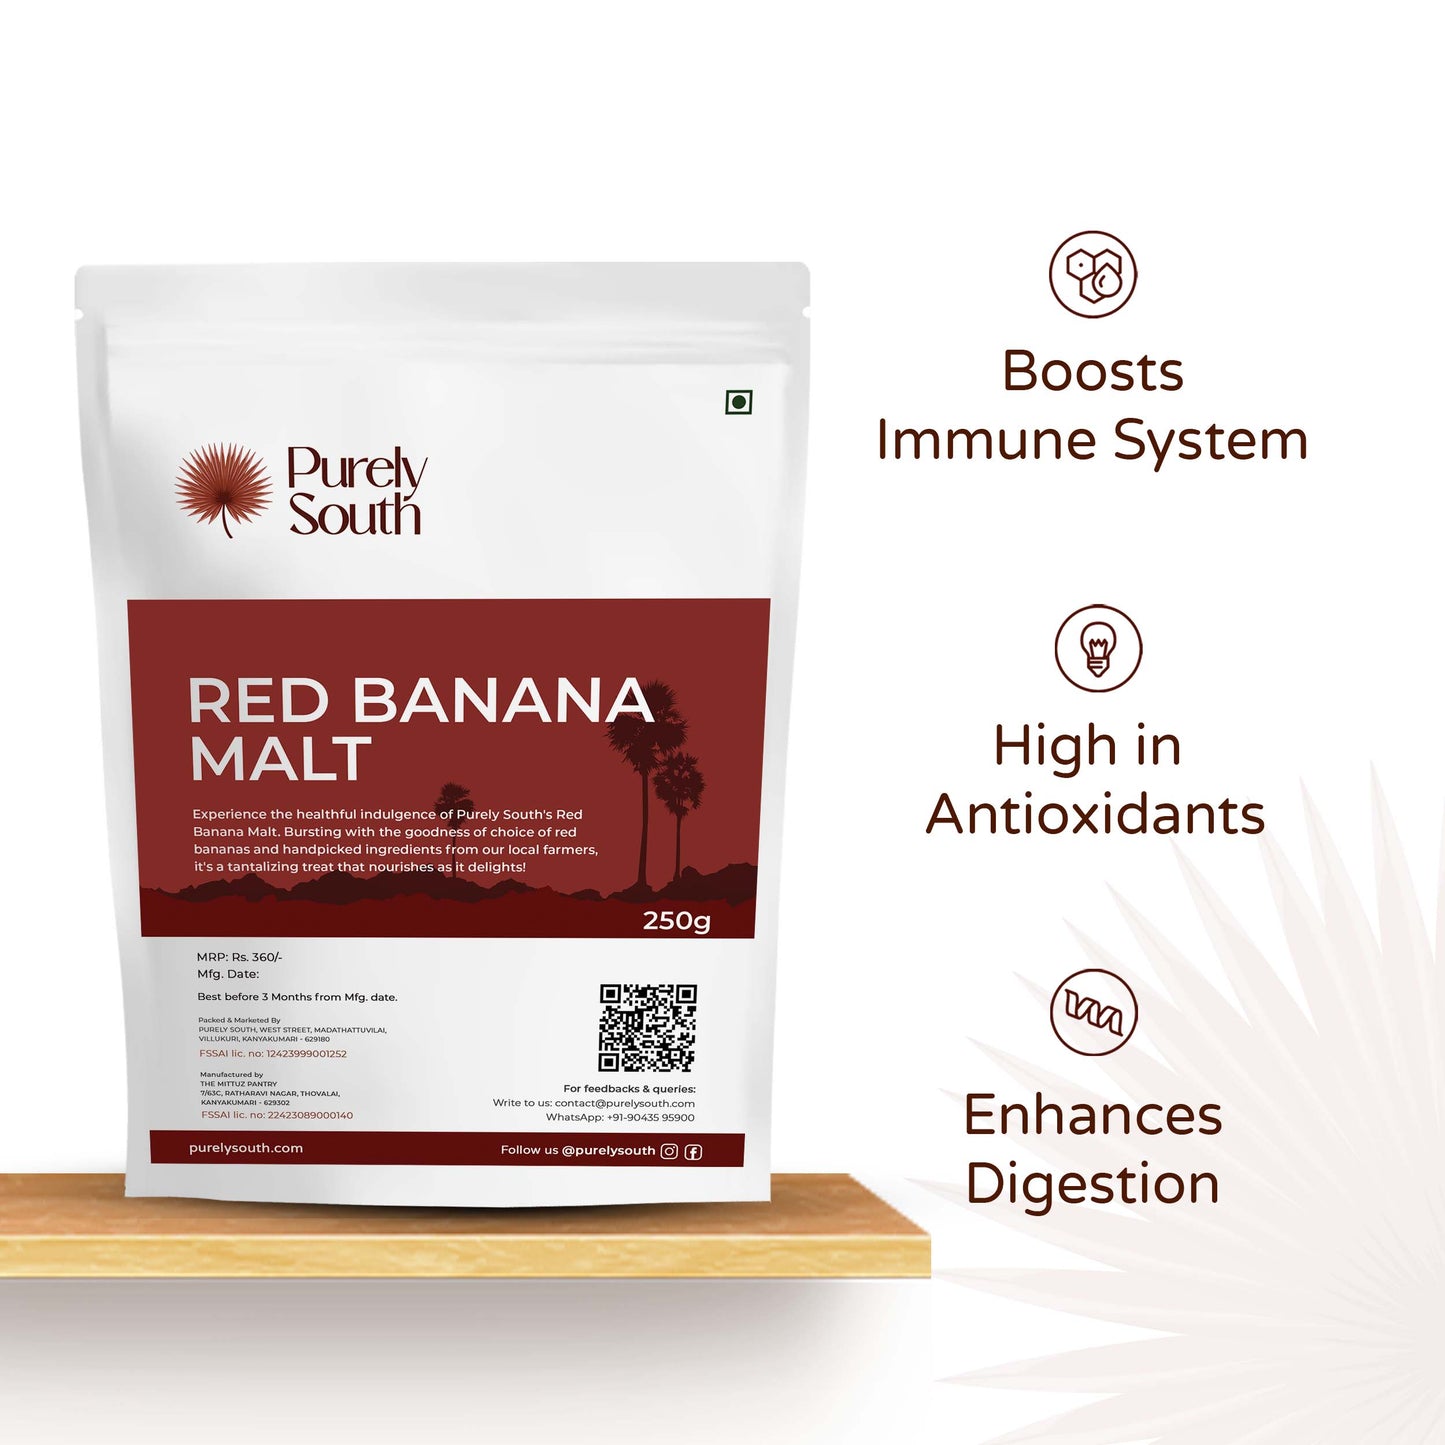 red banana malt benefits